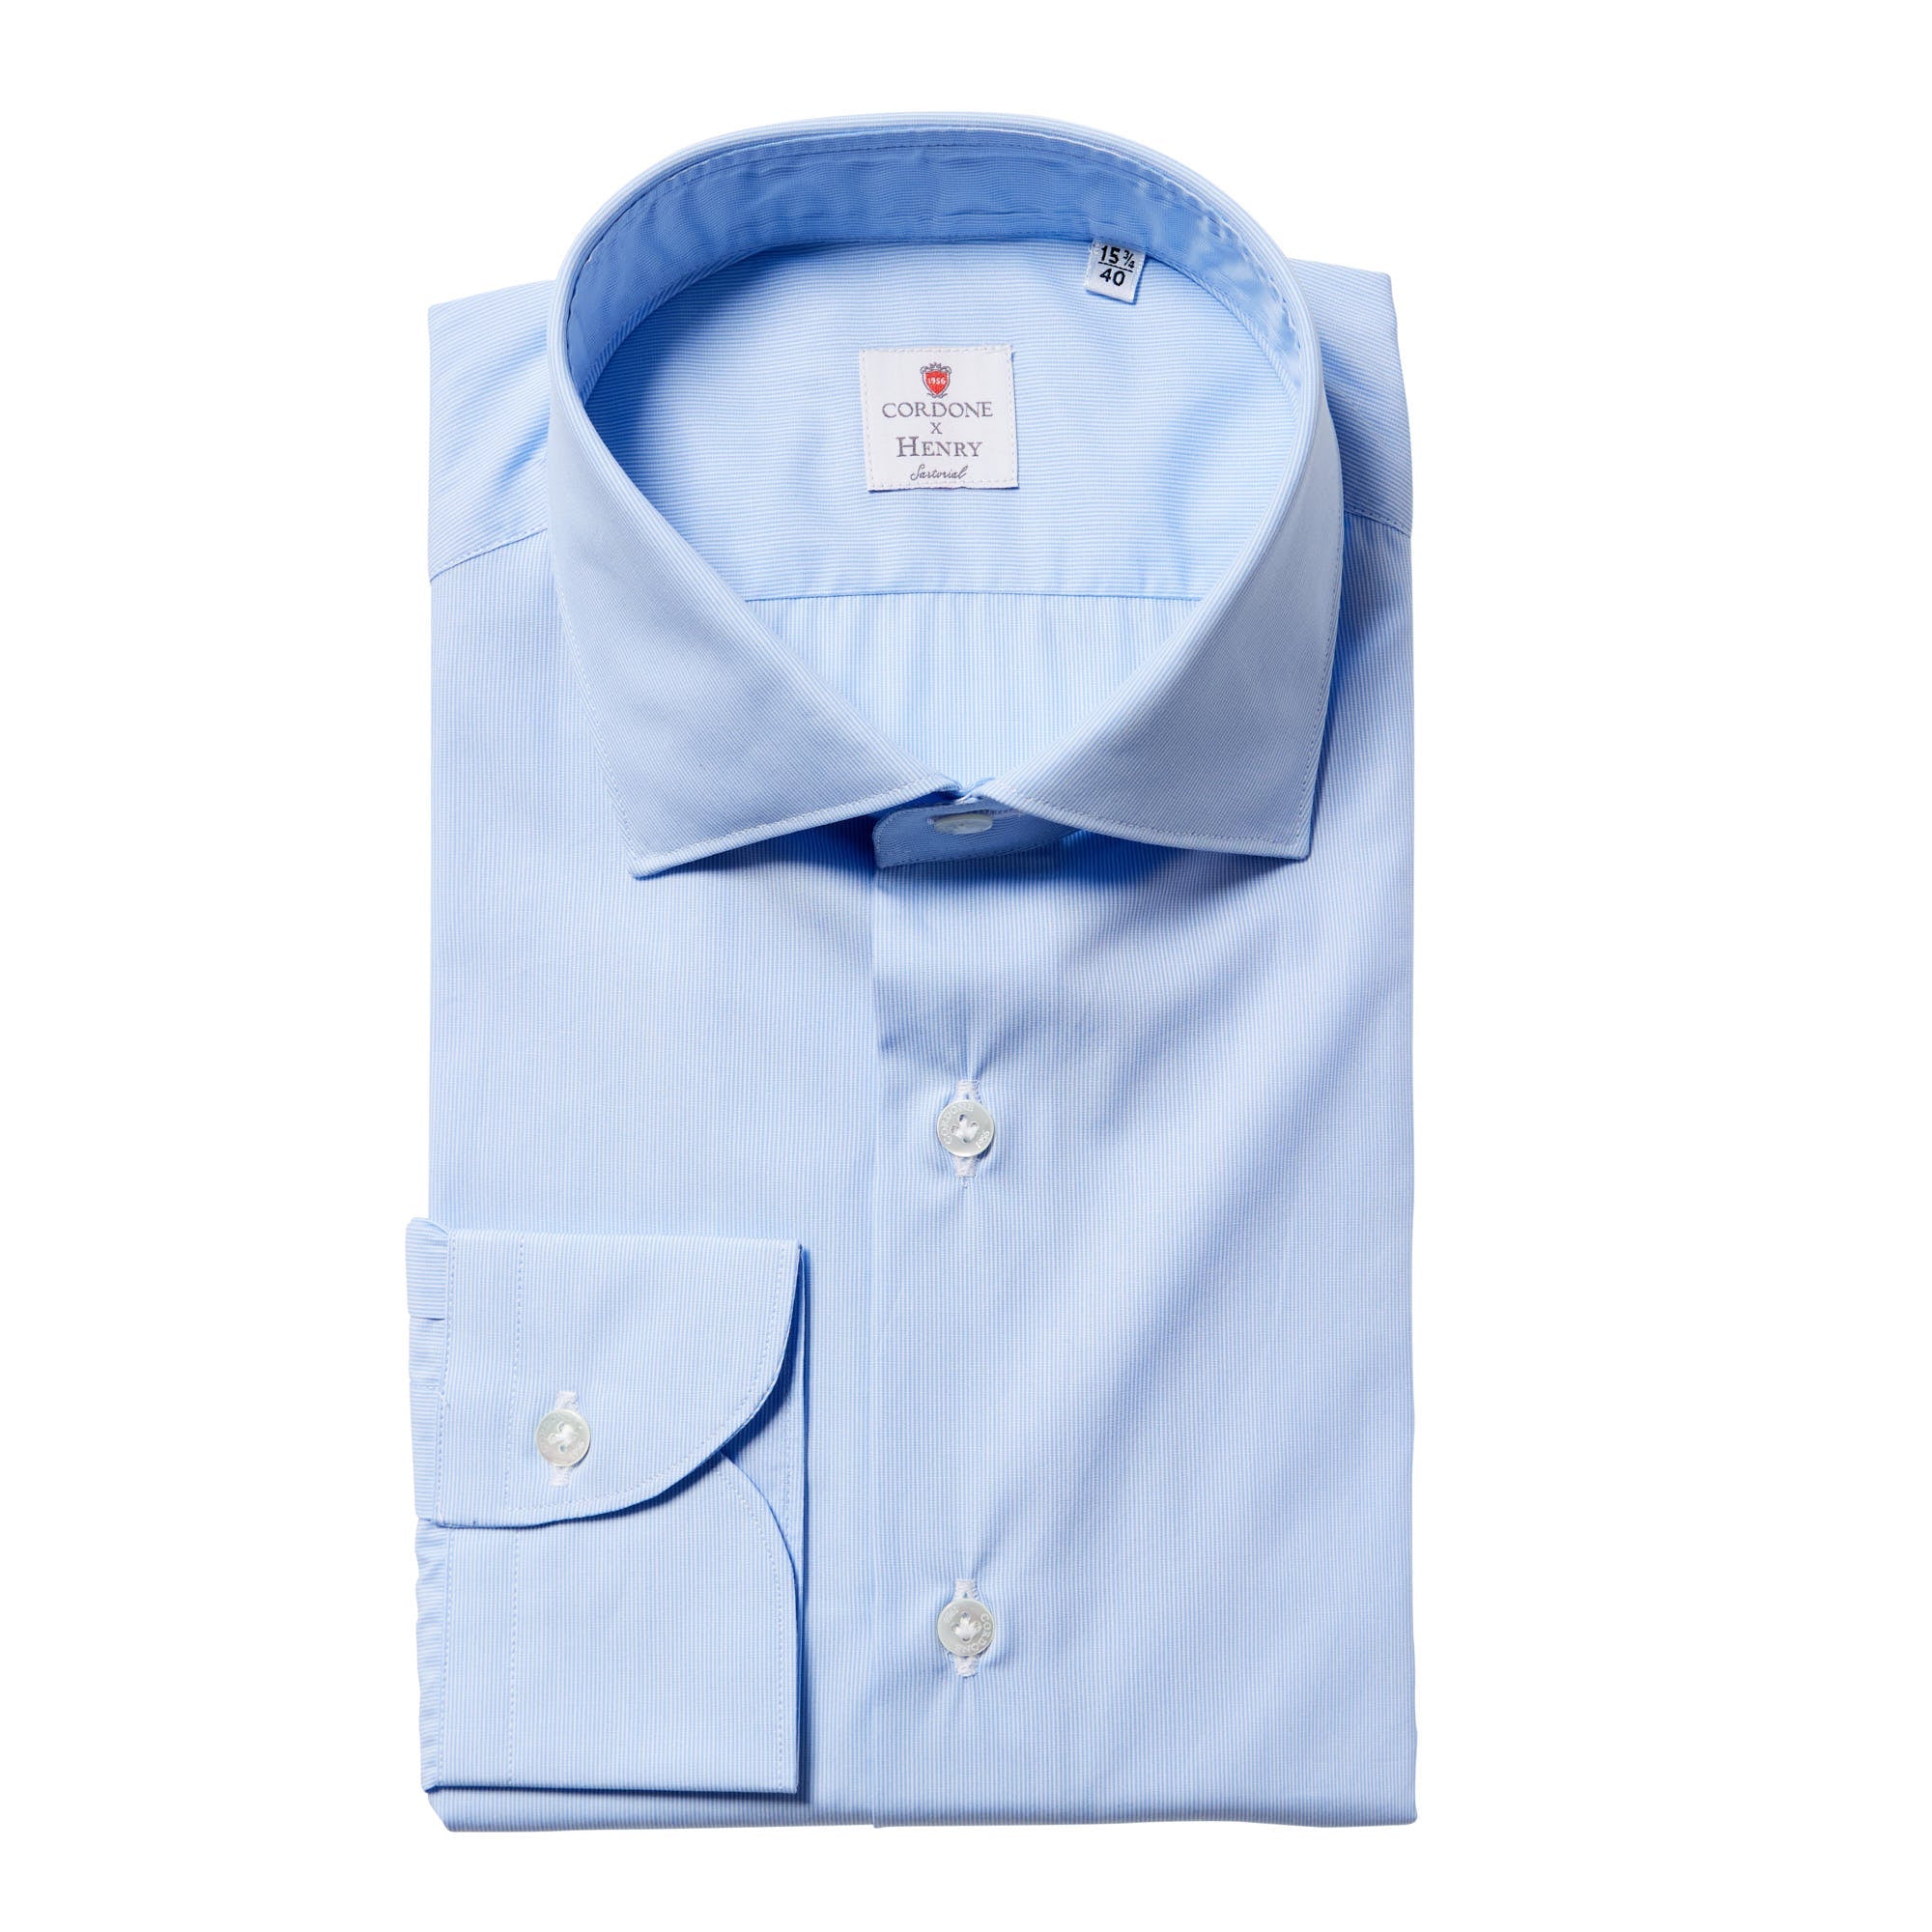 CORDONE Micro Stripe Long Sleeve Single Cuff Shirt BLUE/WHITE - Henry BucksShirts38AW240079 - BLWT - SC - 39